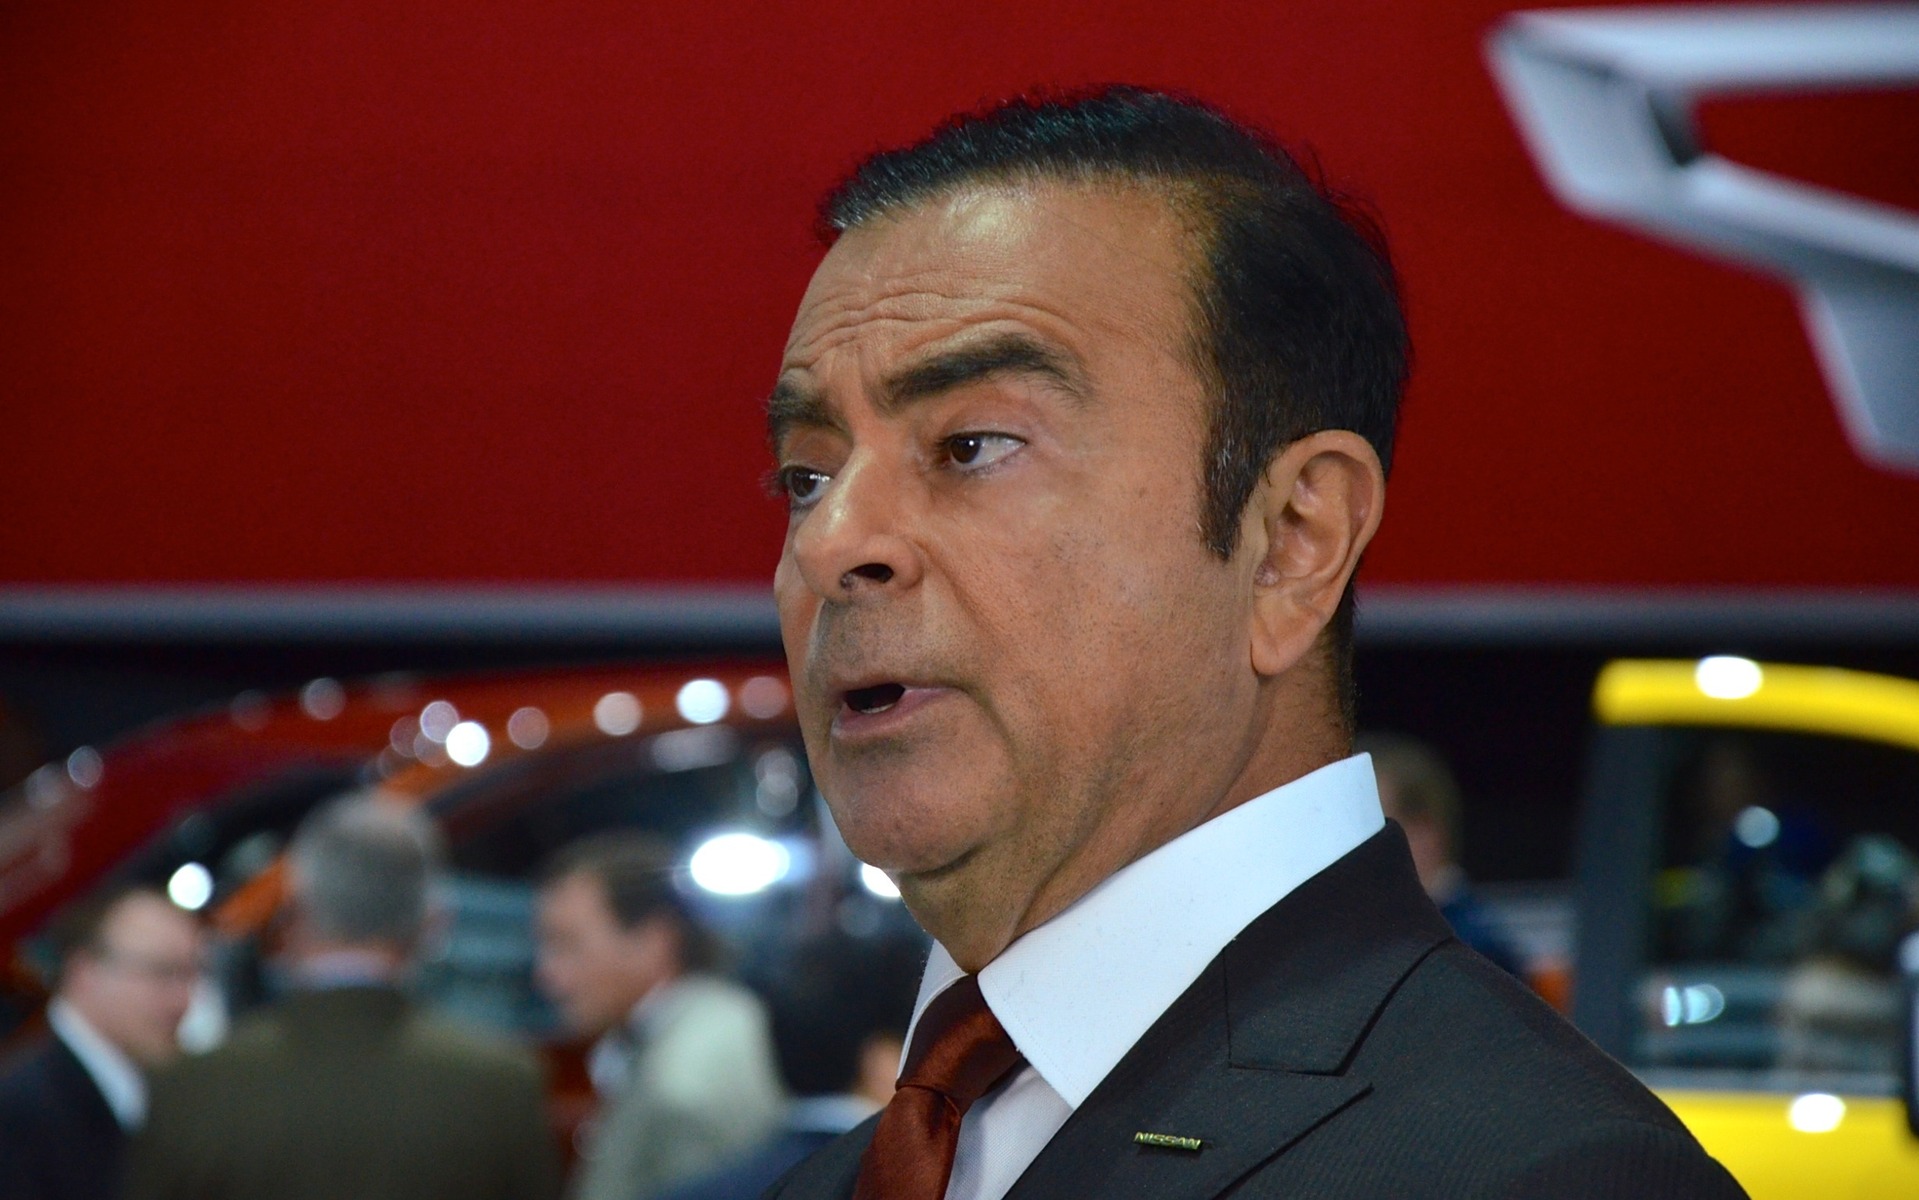 Carlos Ghosn, CEO of Renault-Nissan